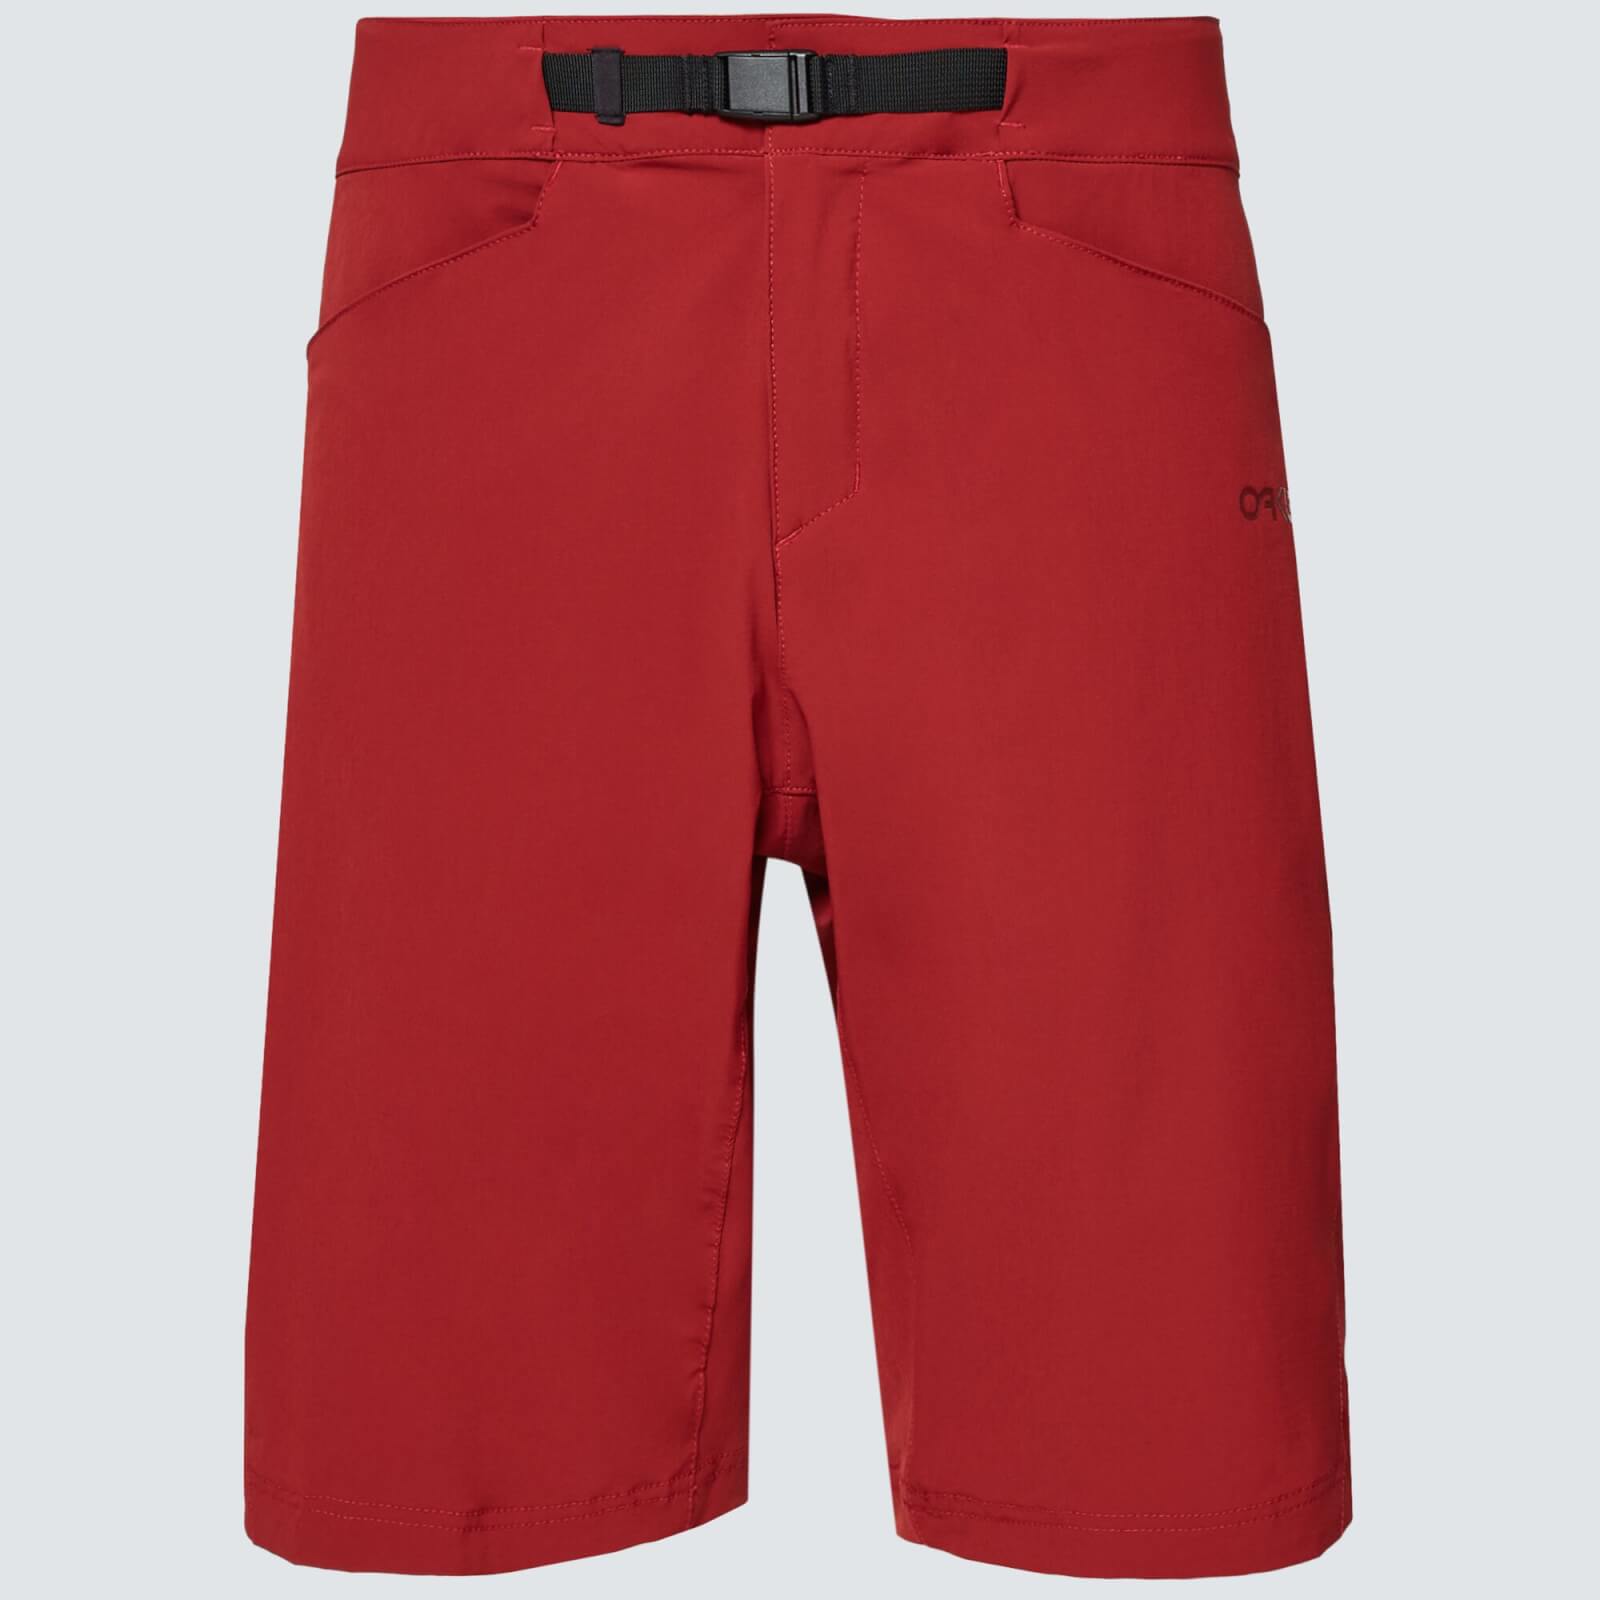 Oakley Drop In MTB Shorts - 30 - Iron red